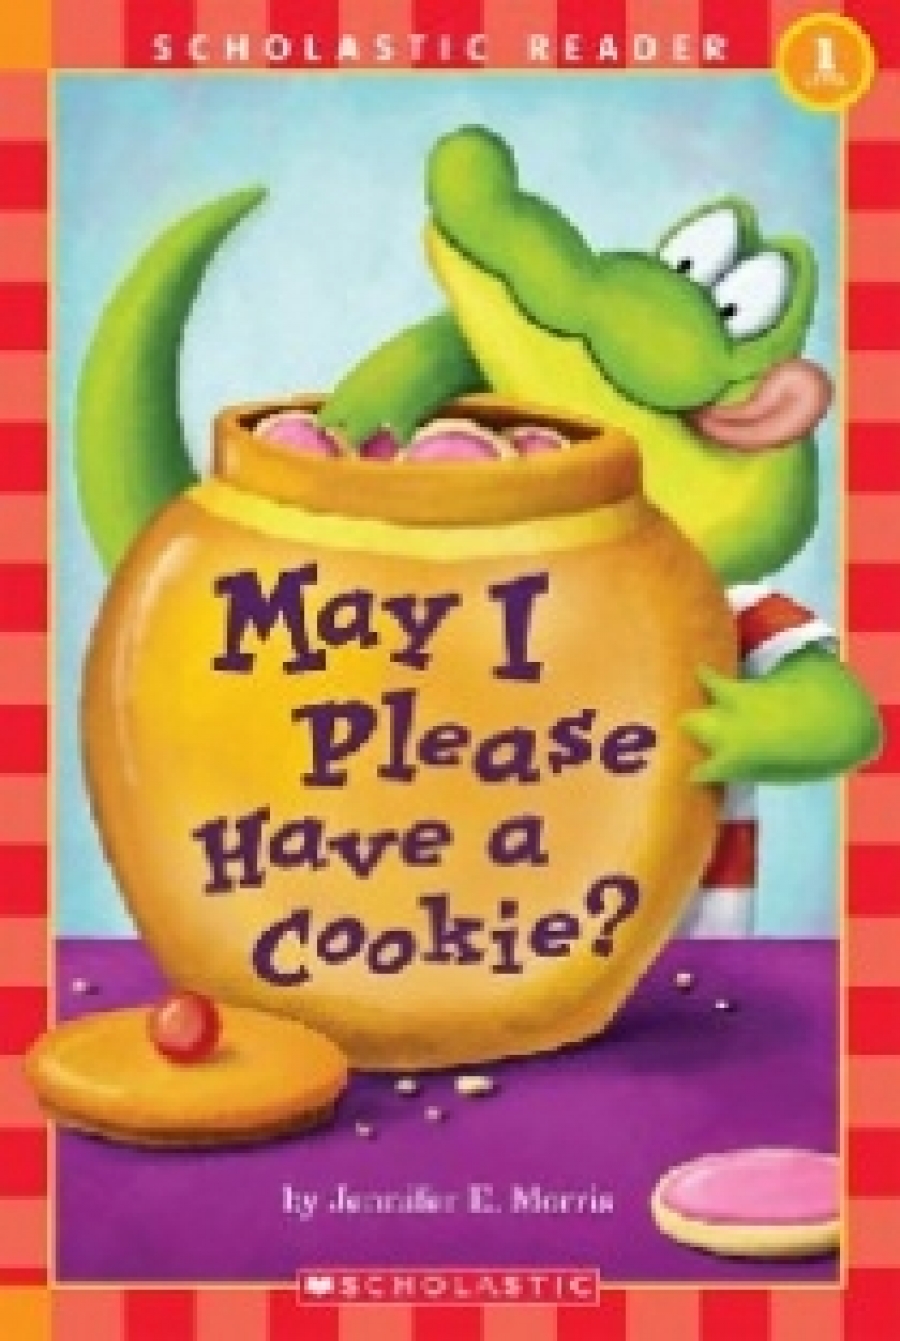 Morris Jennifer E. May I Please Have a Cookie? 